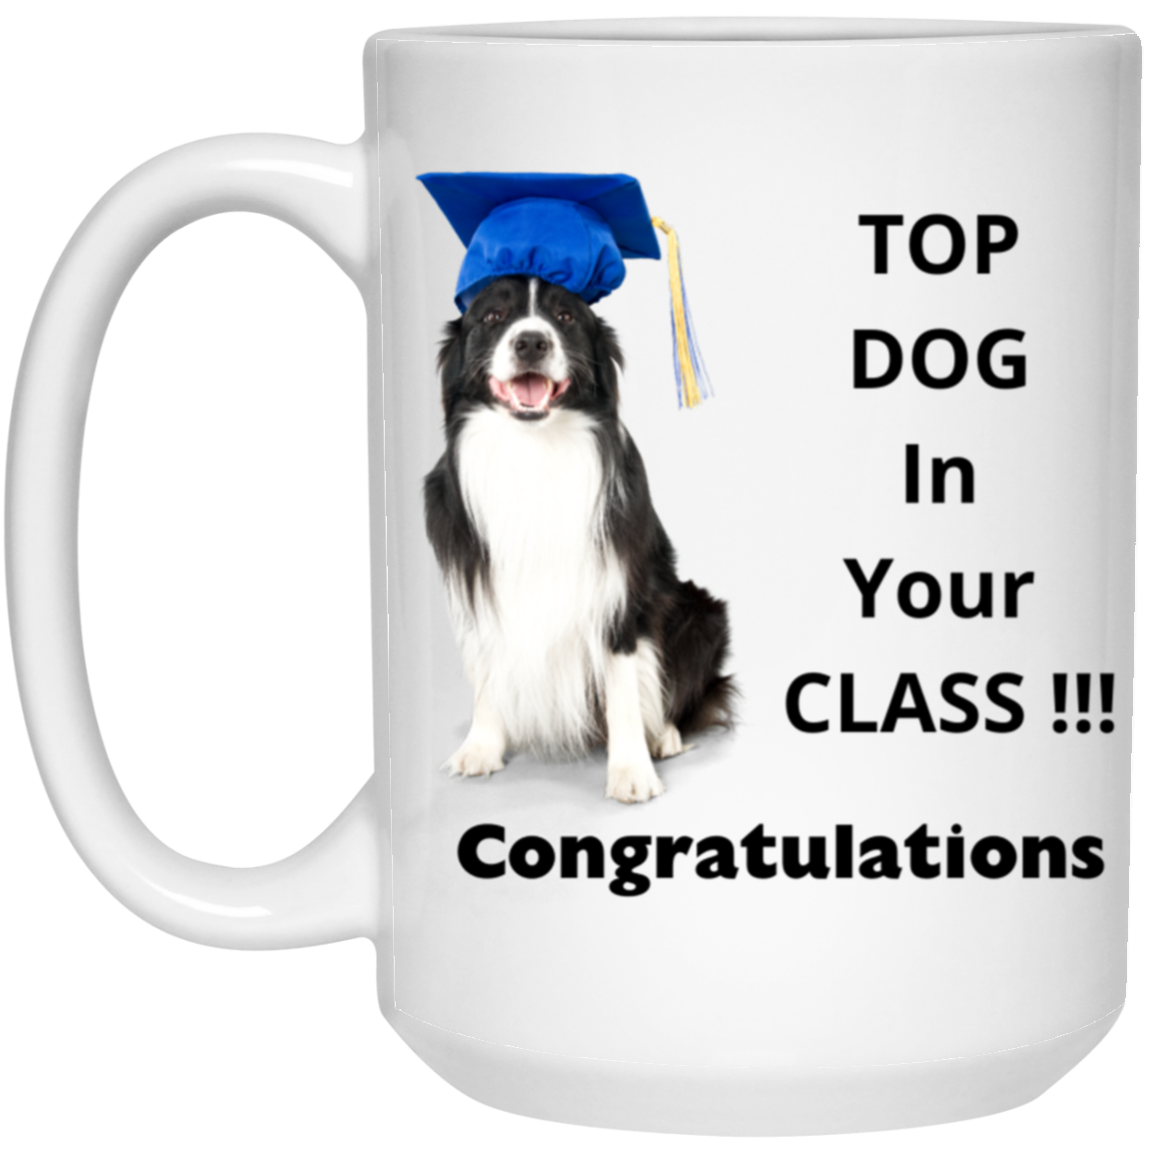 Graduate ~Top Dog in Your Class ~ 15 oz. White Mug